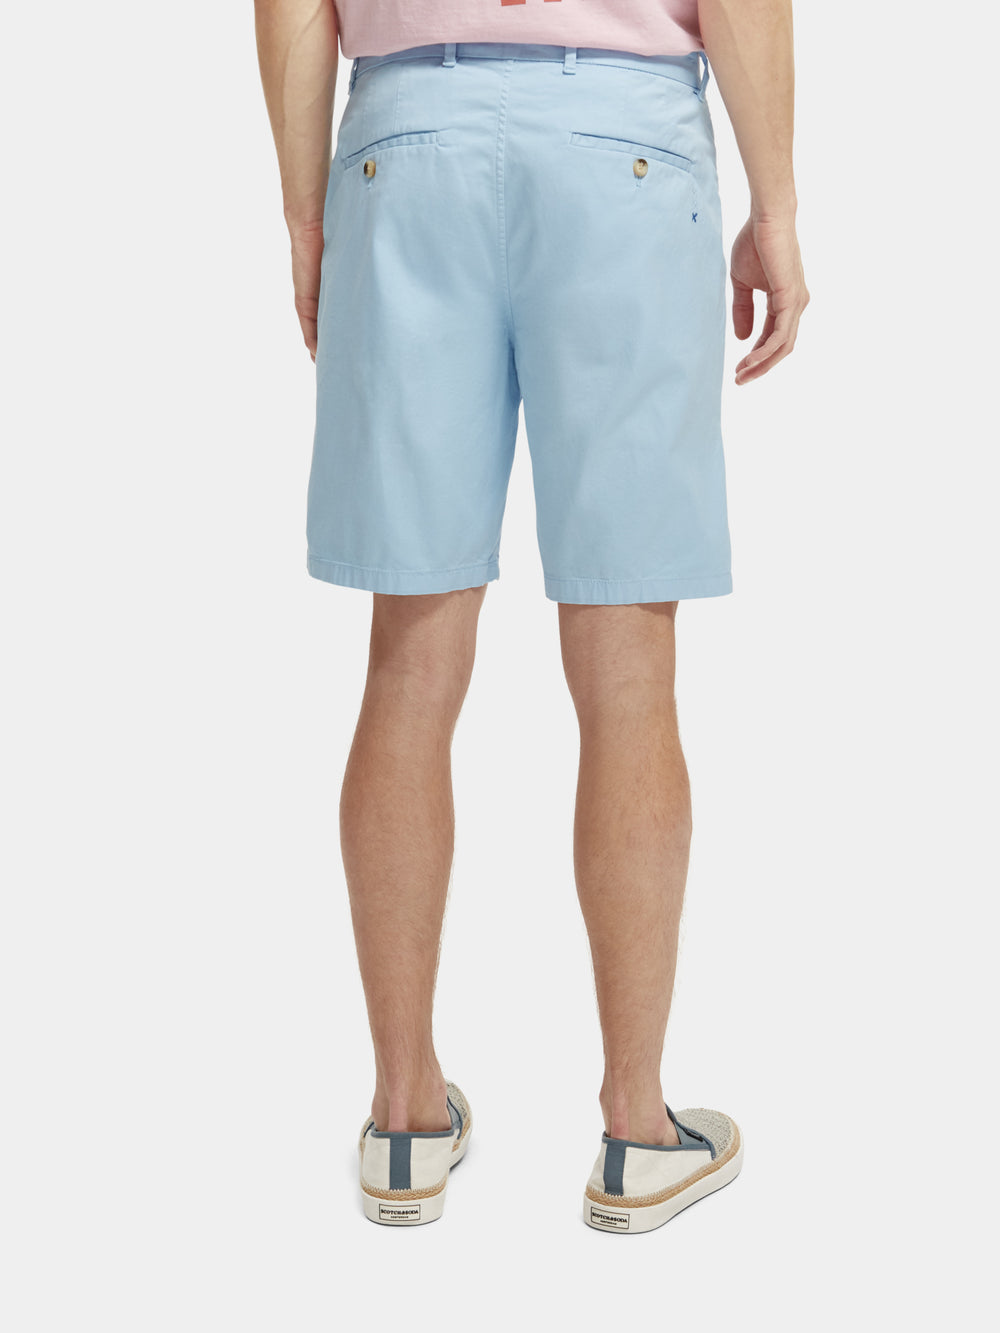 Stuart garment-dyed pima cotton shorts - Scotch & Soda NZ